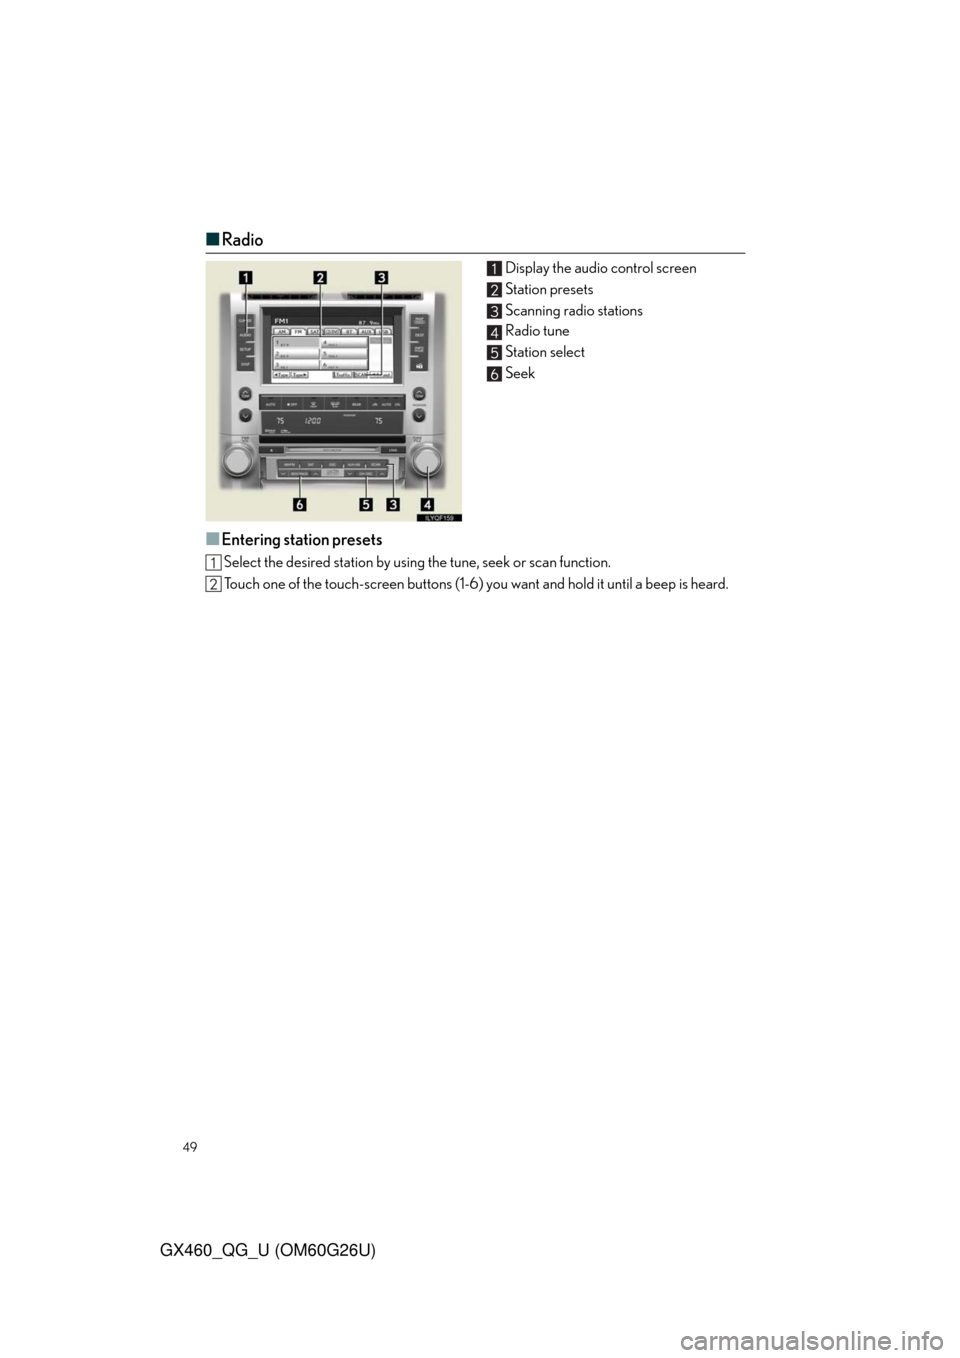 Lexus GX460 2011  Intuitive Parking Assist / LEXUS 2011 GX460 OWNERS MANUAL QUICK GUIDE (OM60G26U) 49
GX460_QG_U (OM60G26U)
■Radio
Display the audio control screen
Station presets
Scanning radio stations
Radio tune
Station select
Seek
■Entering station presets
Select the desired station by usin